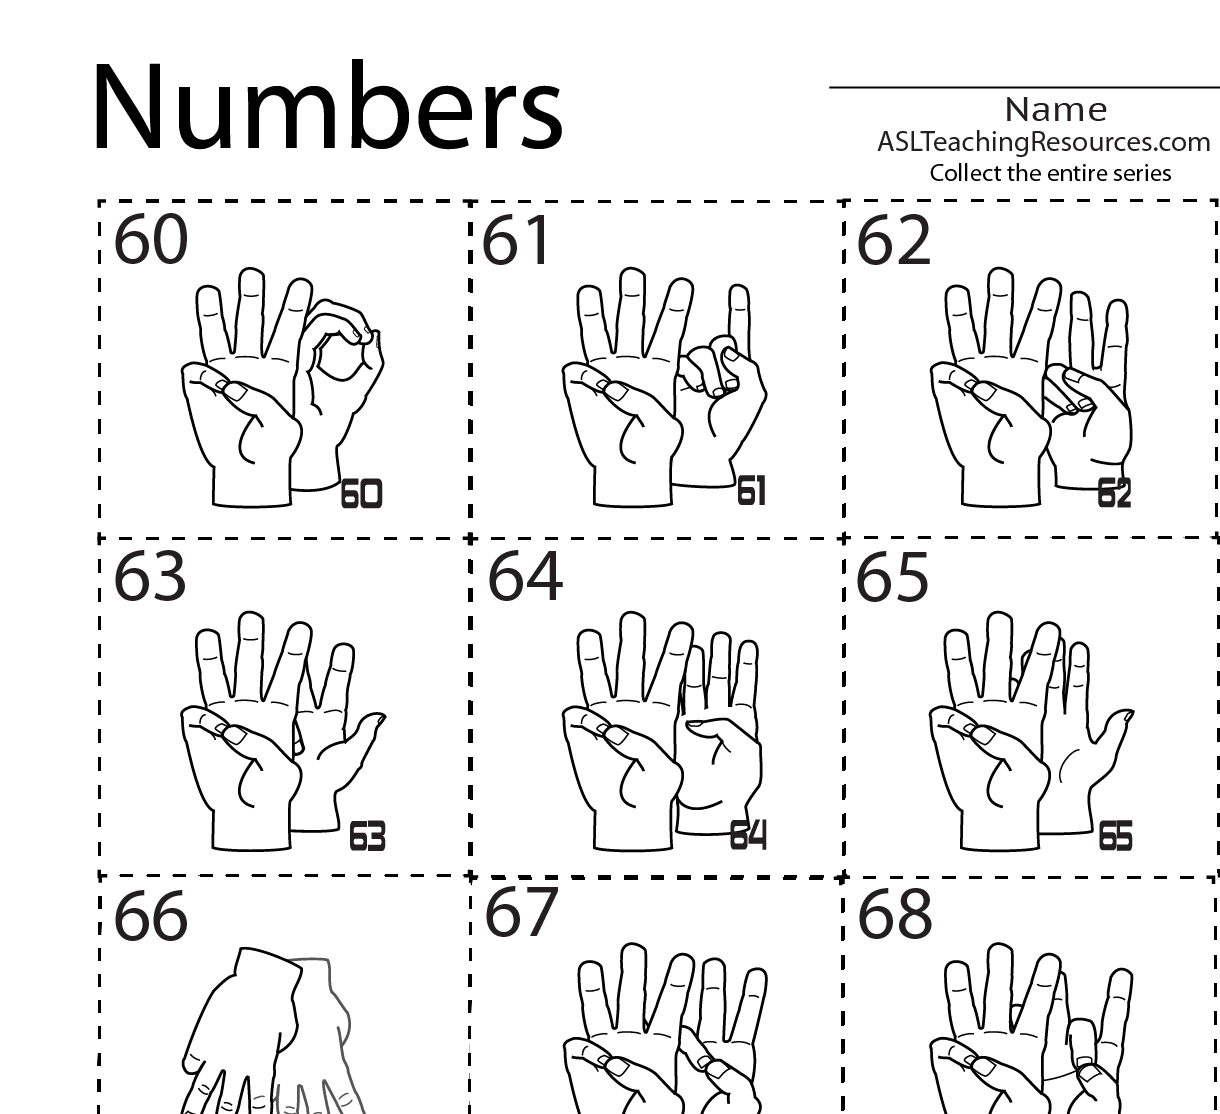 numbers-flashcards-set-60-70-asl-teaching-resources